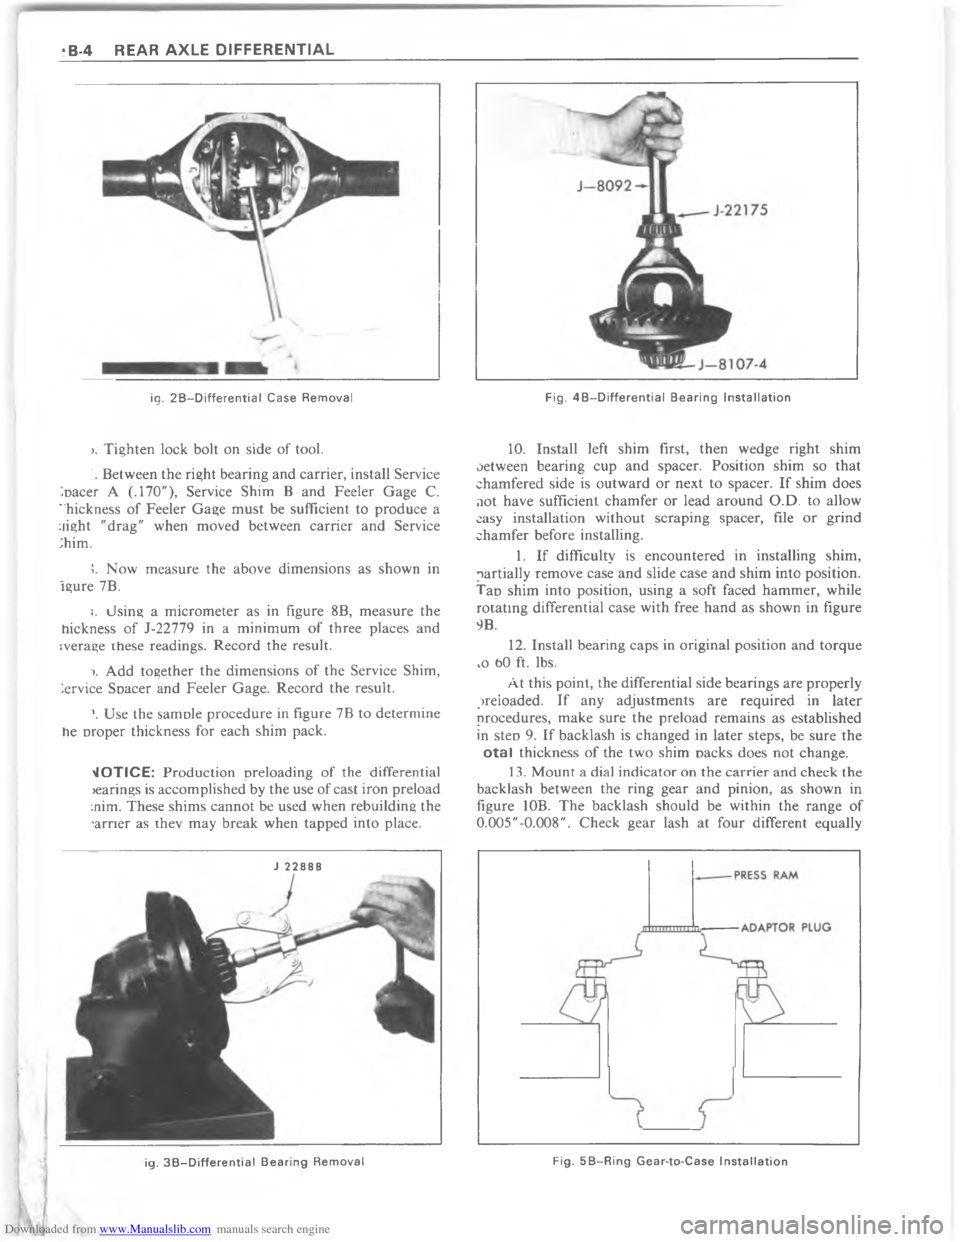 CHEVROLET MALIBU 1980 4.G Manual PDF Downloaded from www.Manualslib.com manuals search engine ??  > !!	*F4  /   & BB       # : 	G
6
;




<






=





L*
8B